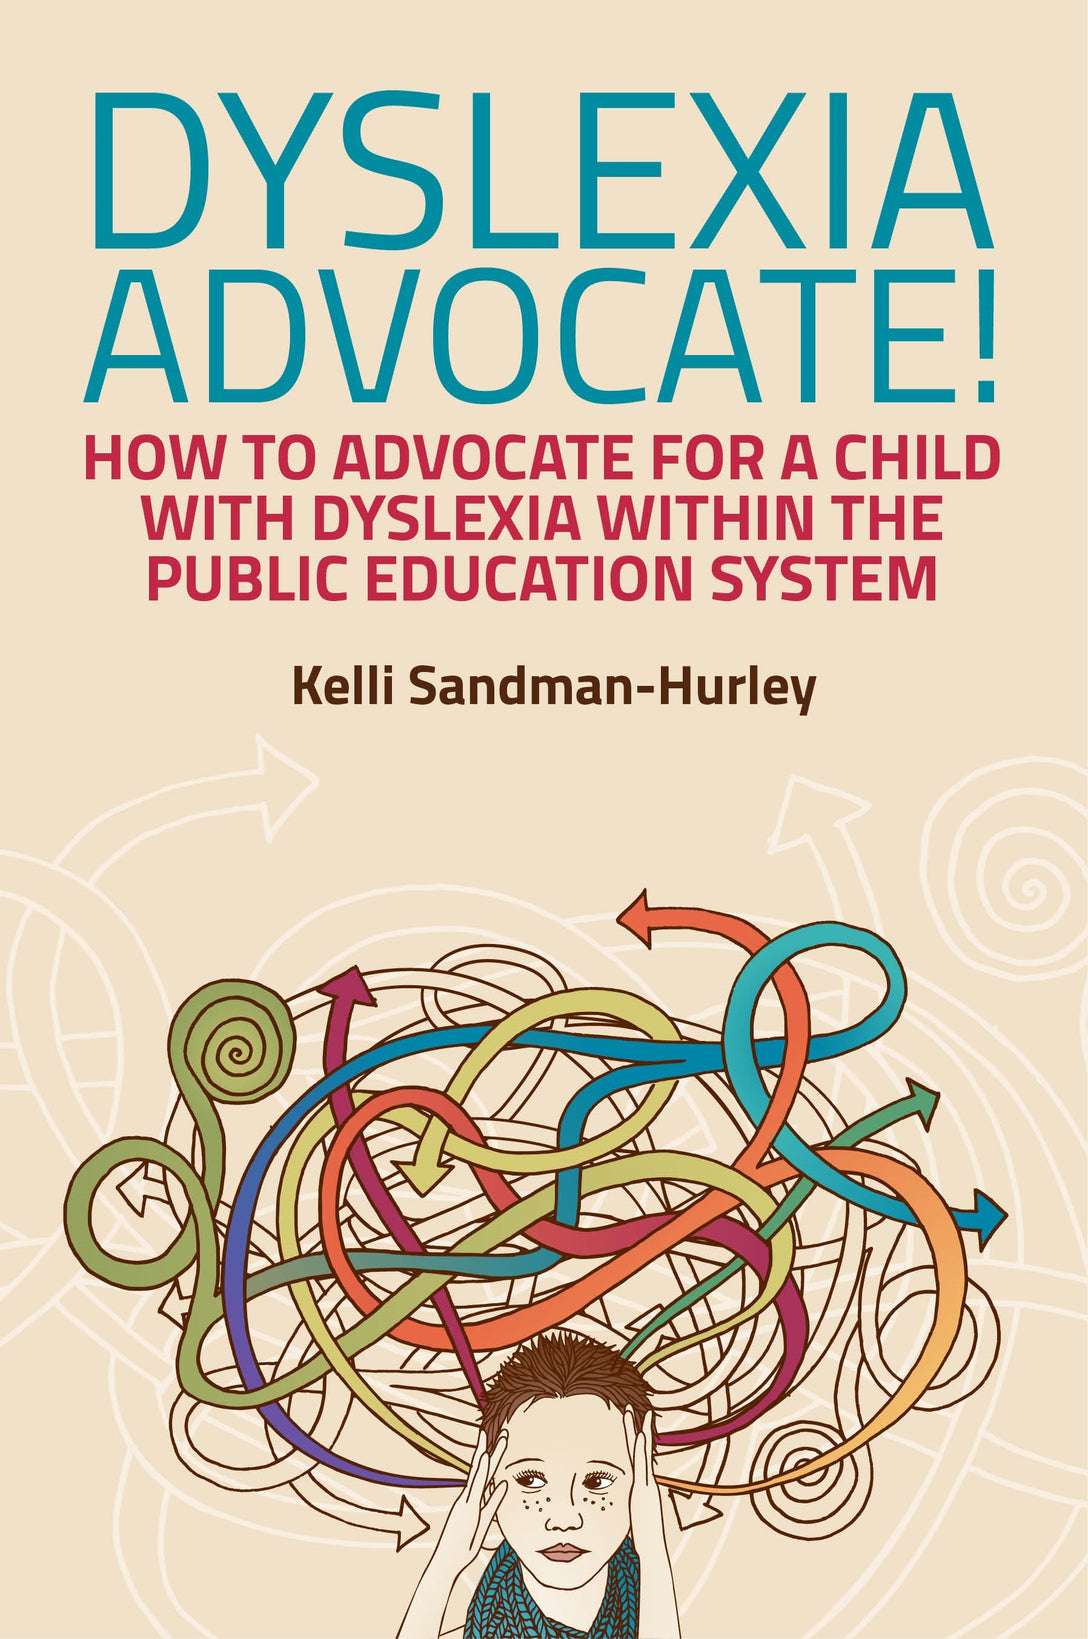 Dyslexia Advocate! by Kelli Sandman-Hurley